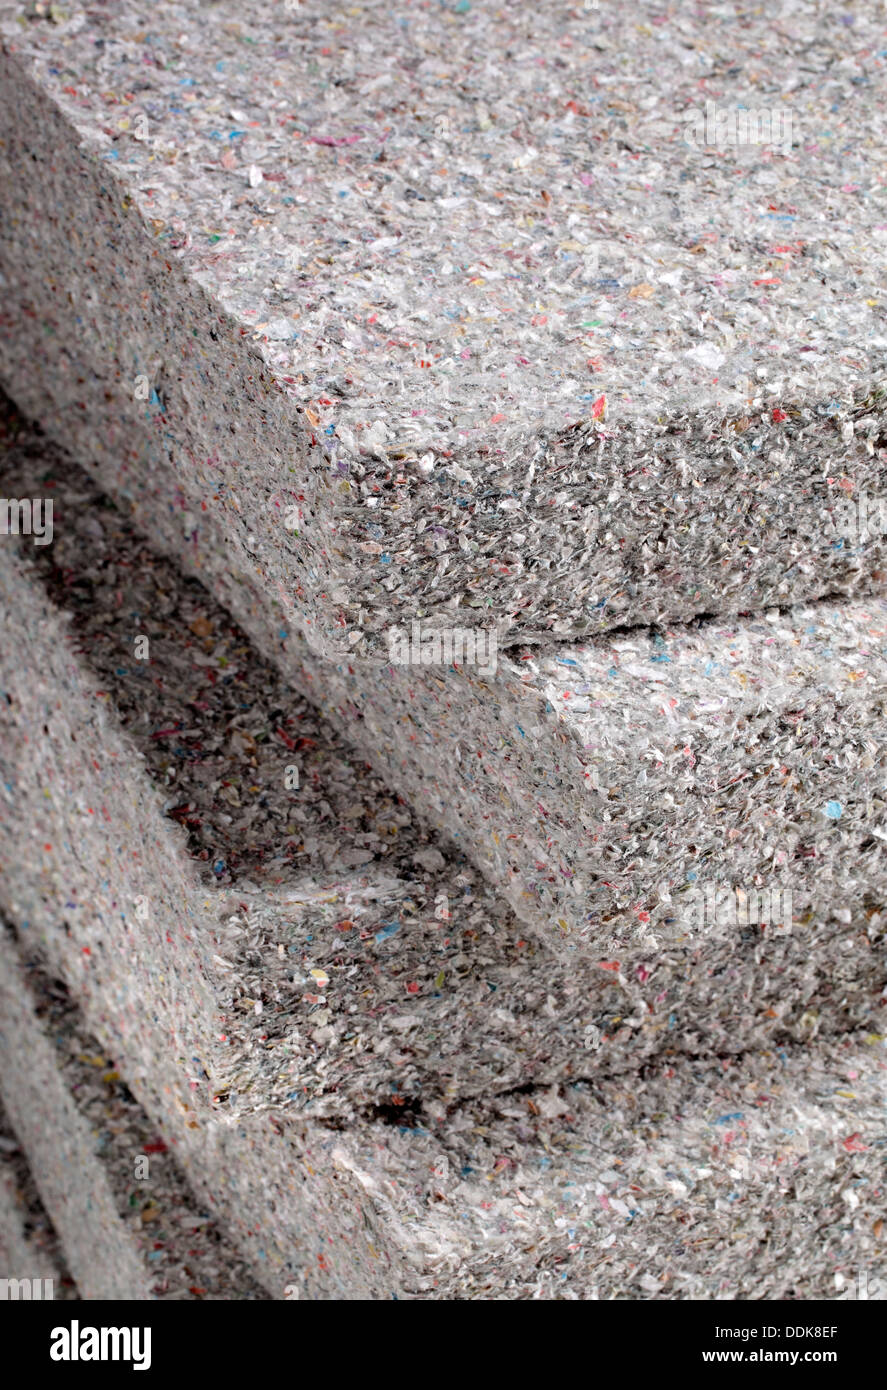 Pila de paneles de aislamiento de celulosa batt, hecha de periódicos reciclados, utilizados como elementos de aislamiento térmico. Foto de stock